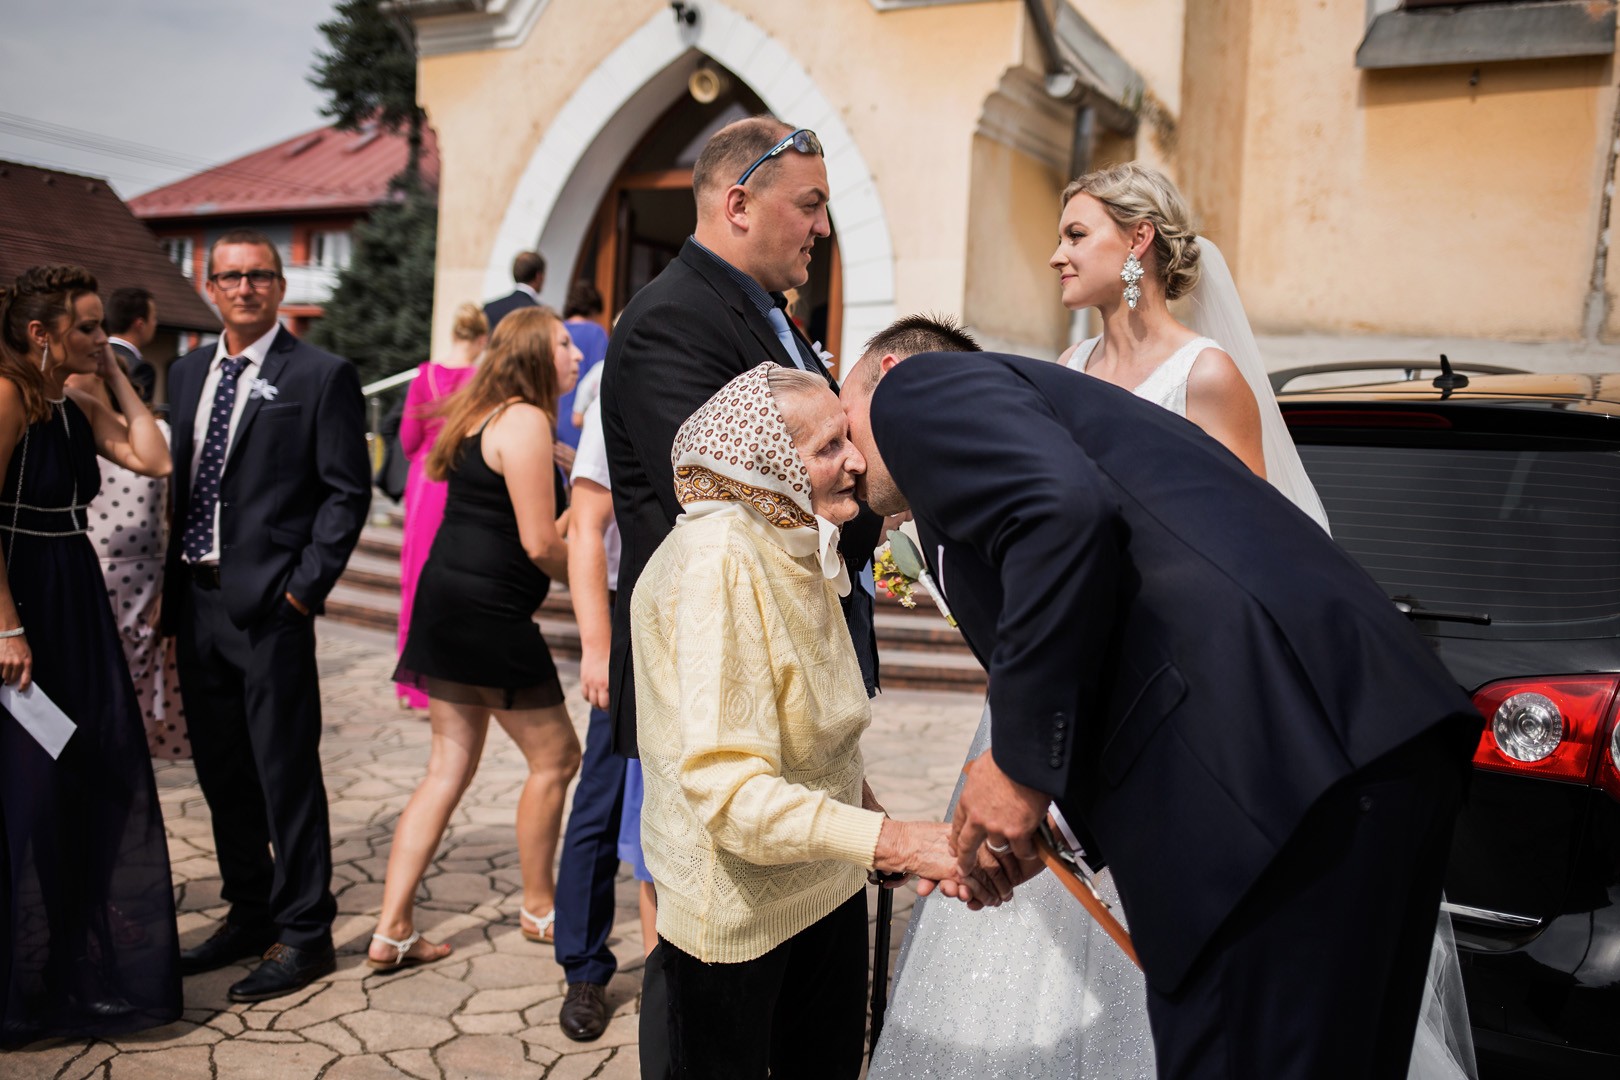 Wedding photos from the wedding day of Miška and Stanka. - 0379.jpg